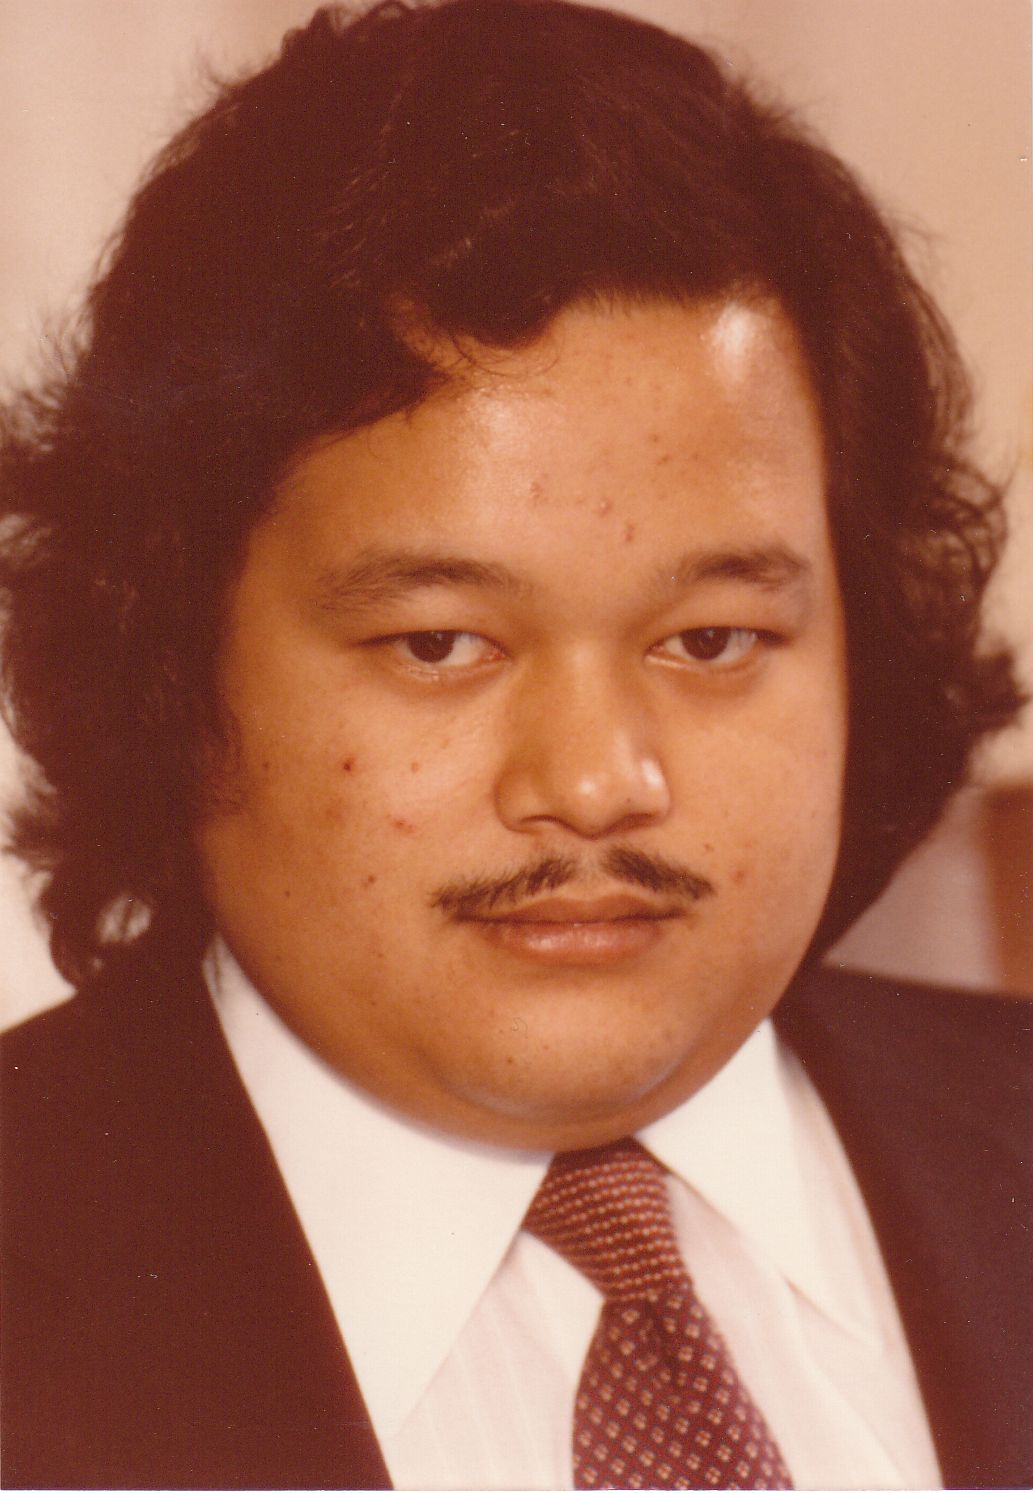 Prem Rawat (Maharaji) With Very Bad Pimples Photo circa 1978